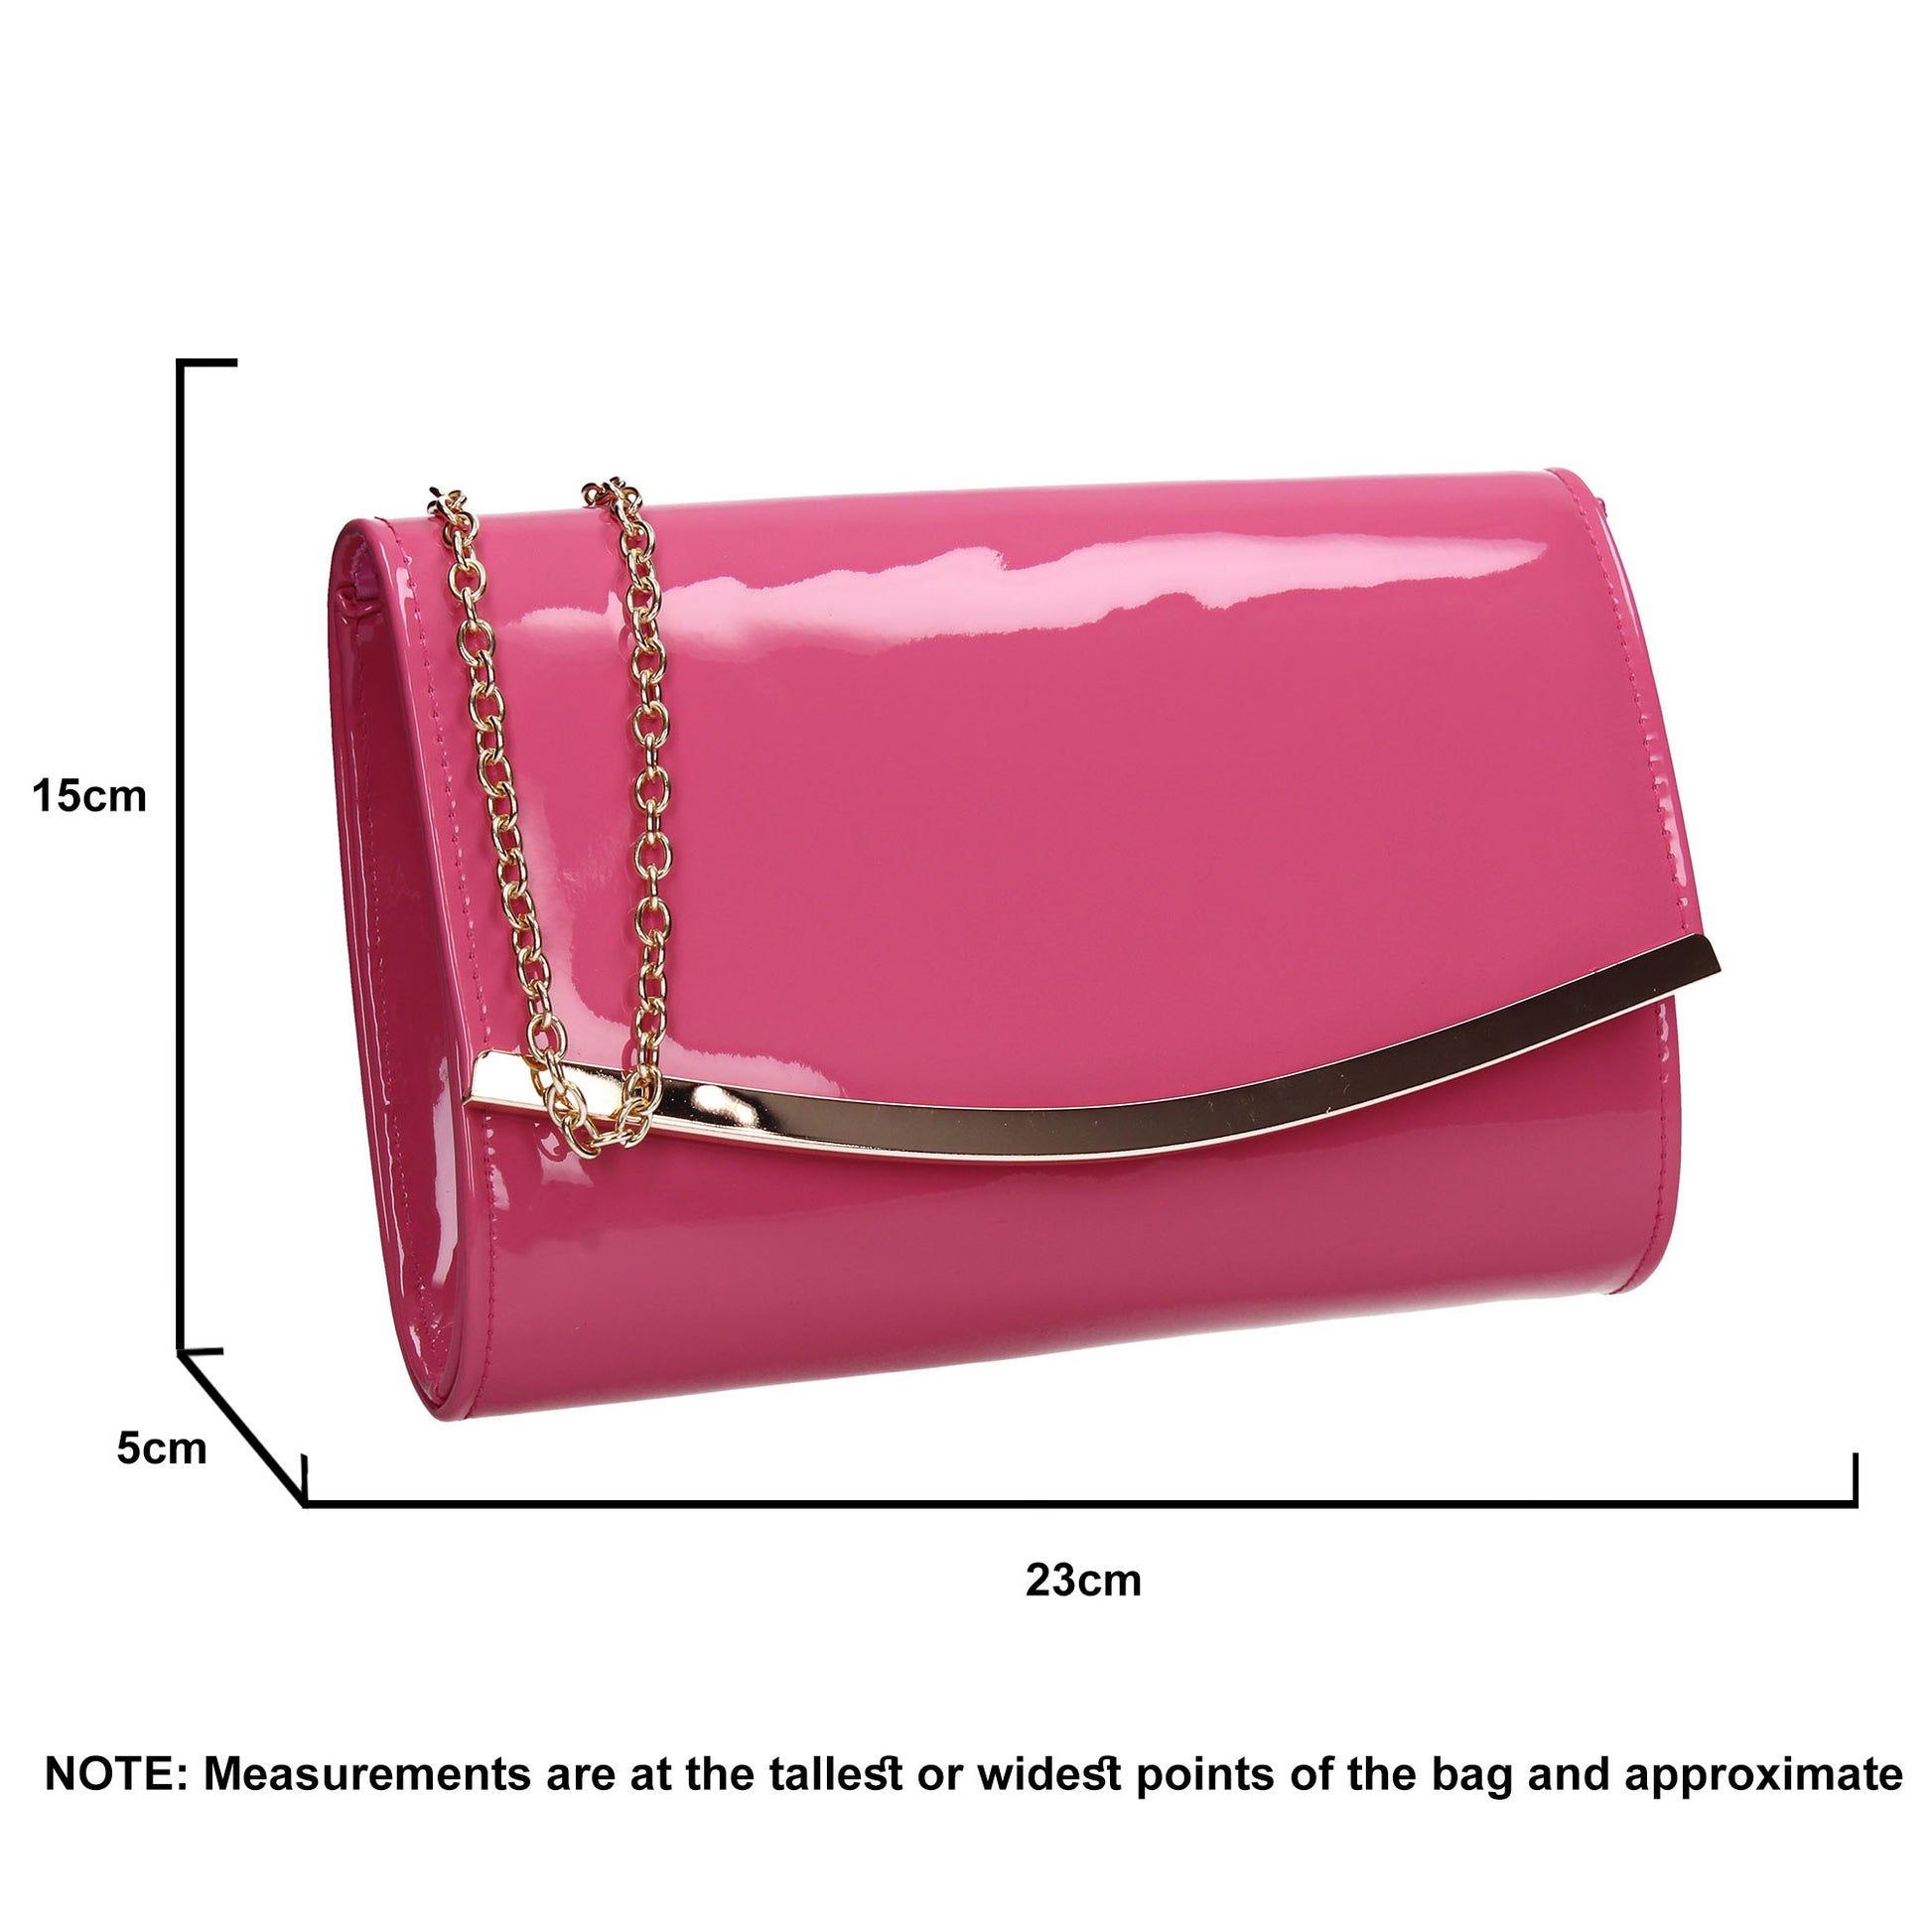 SWANKYSWANS Lilo Clutch Bag Pink Cute Cheap Clutch Bag For Weddings School and Work